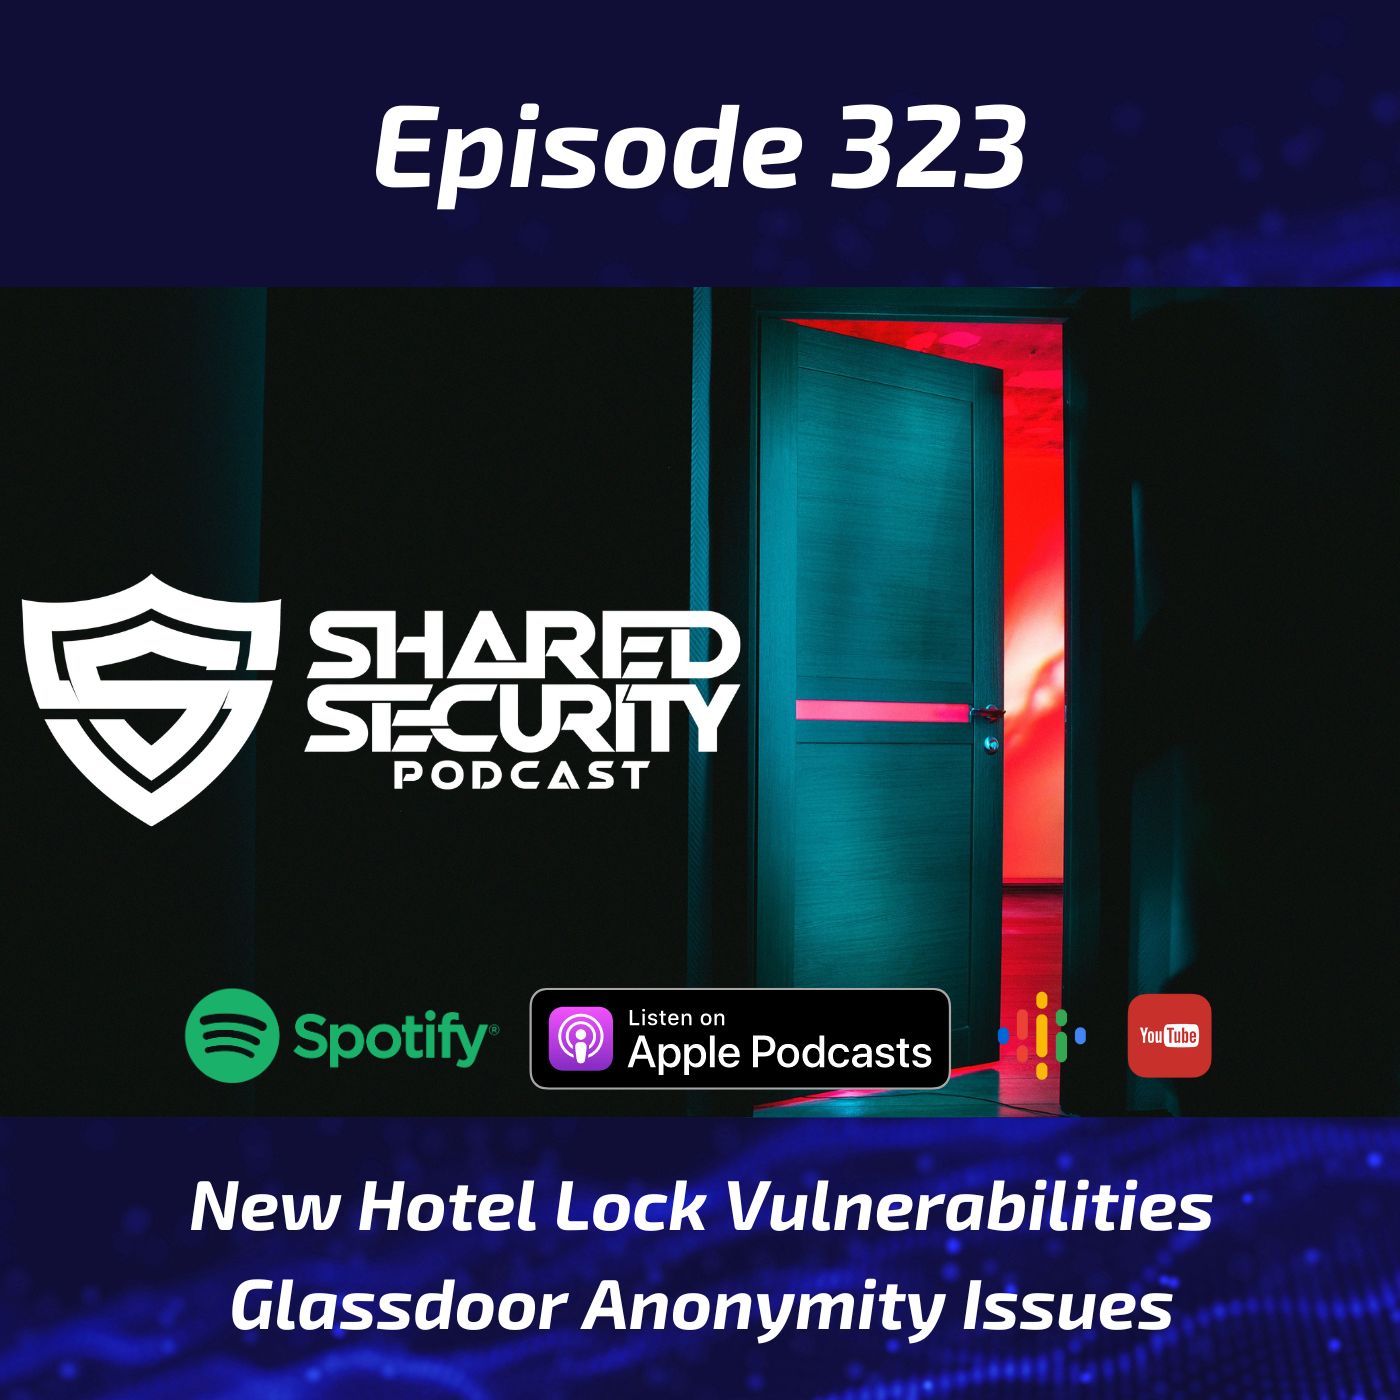 New Hotel Lock Vulnerabilities, Glassdoor Anonymity Issues